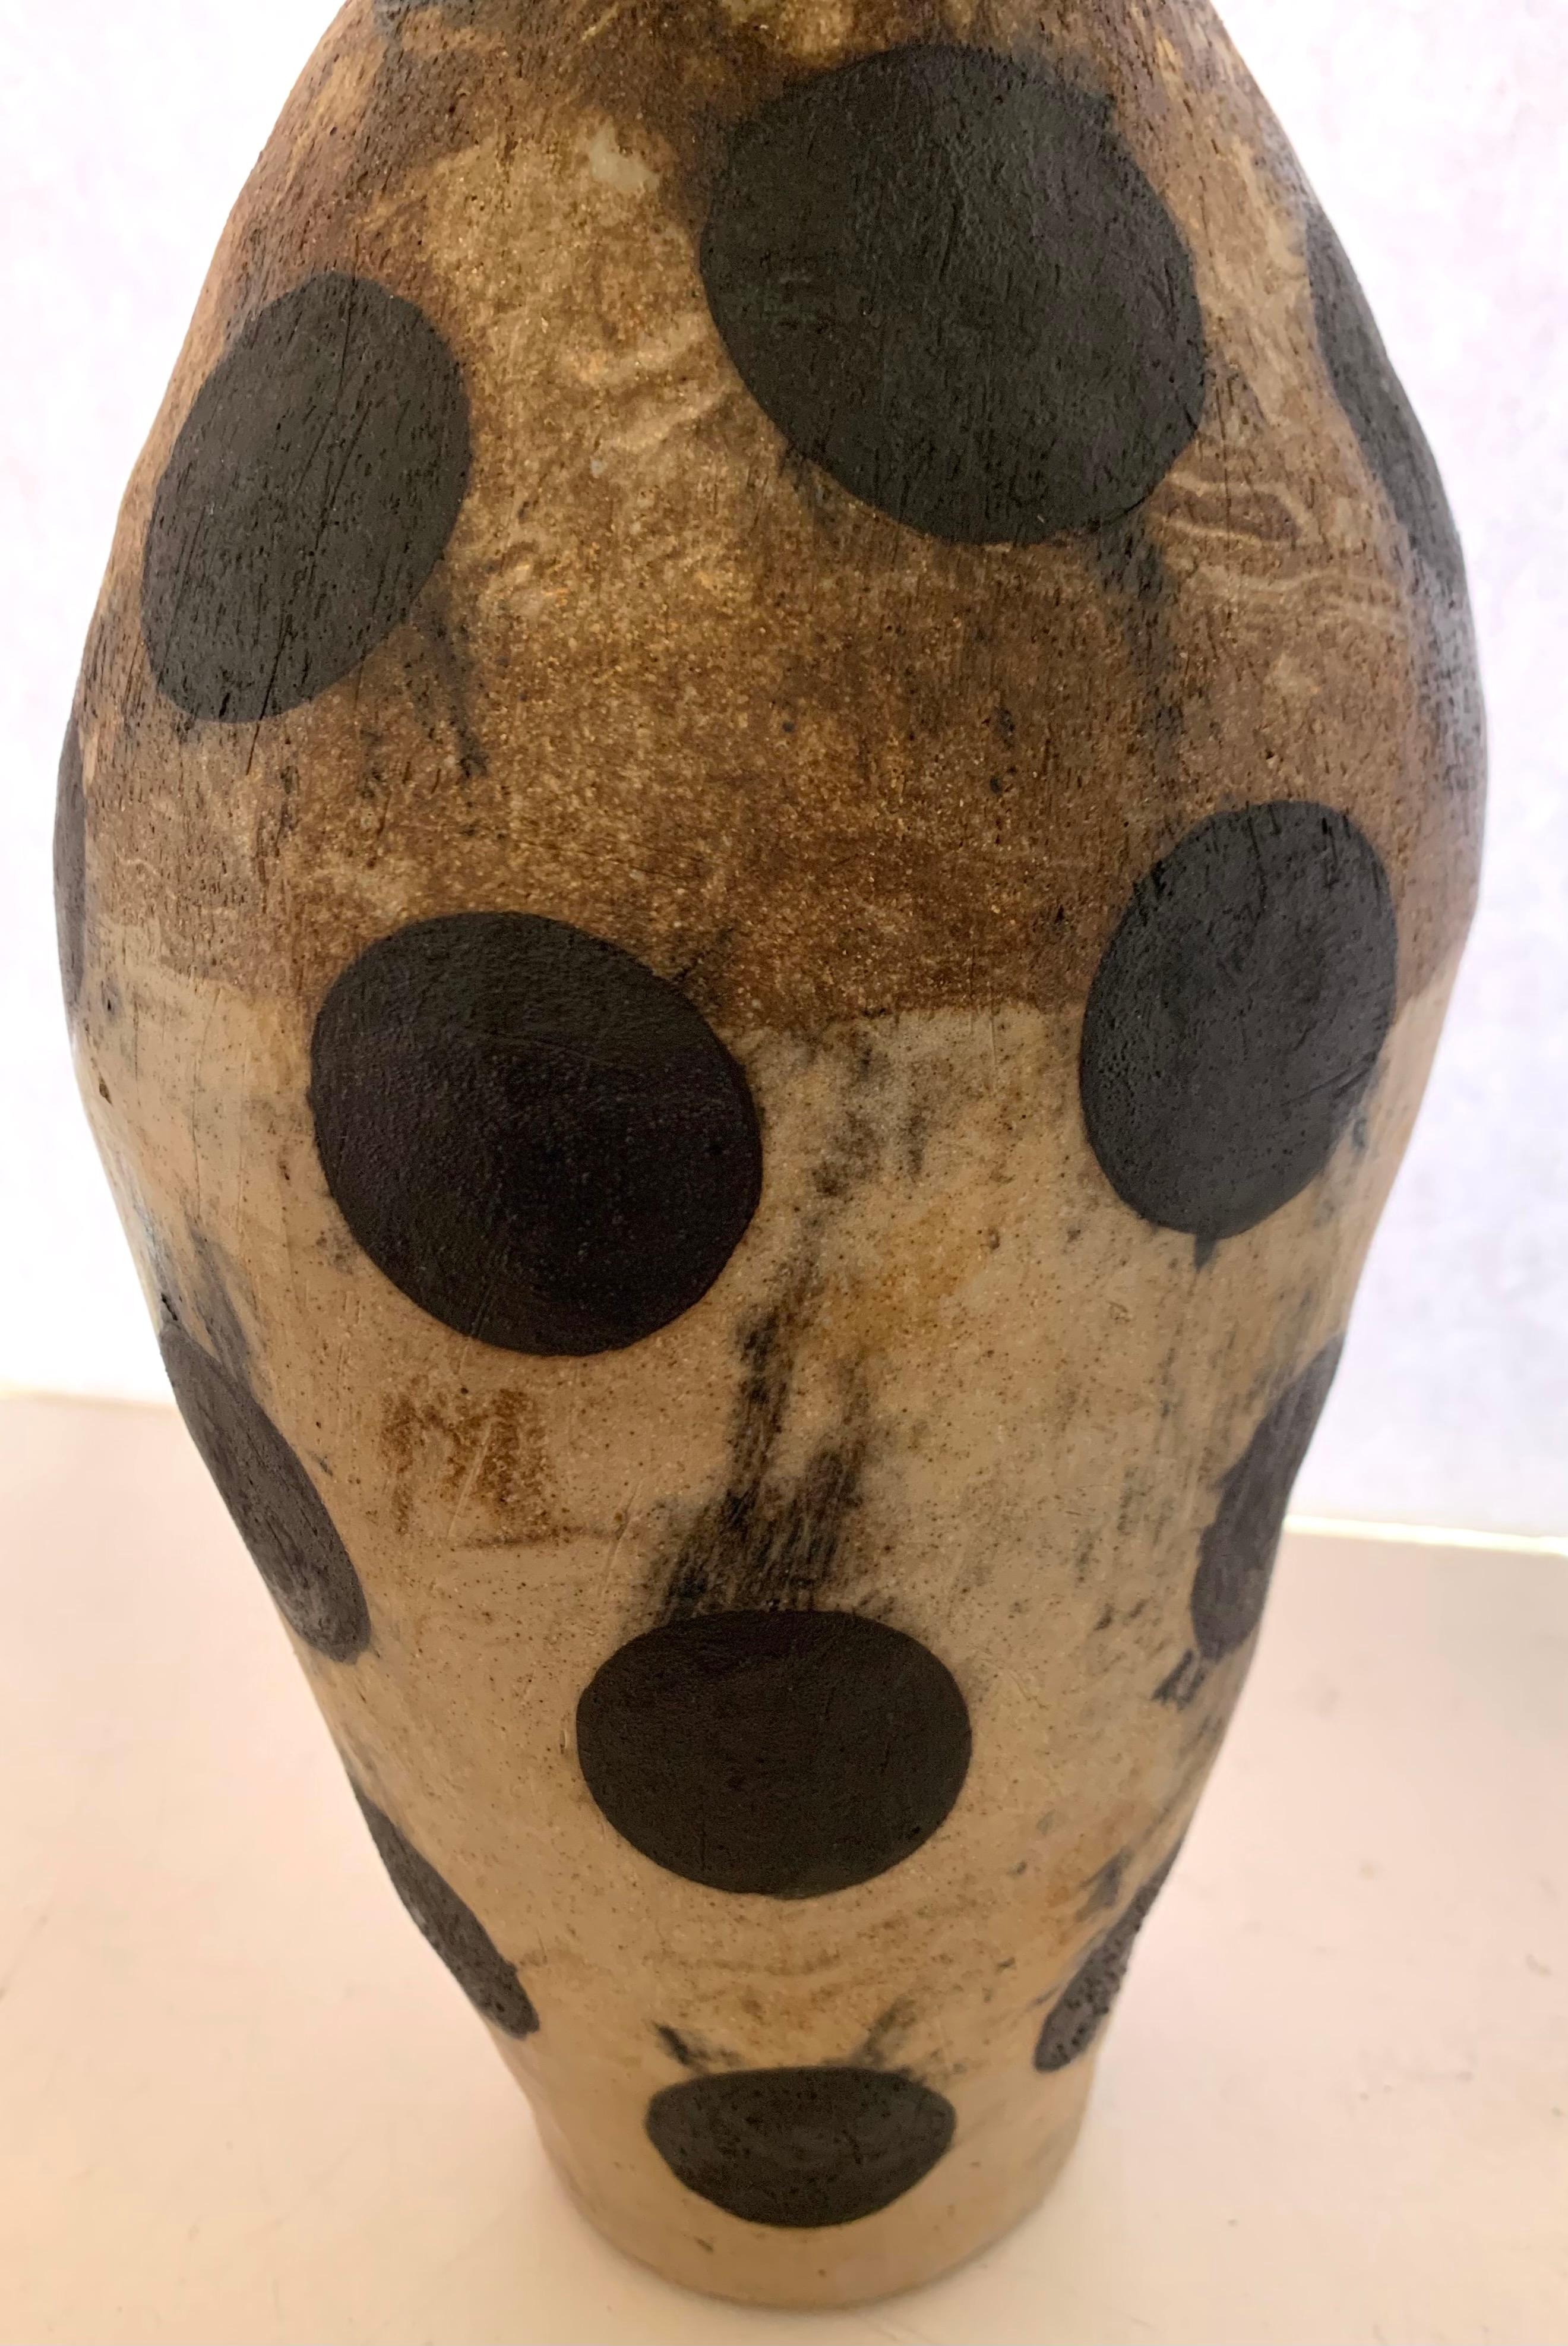 North American Large Black Polka Dot Vase By Brenda Holzke, USA, Contemporary